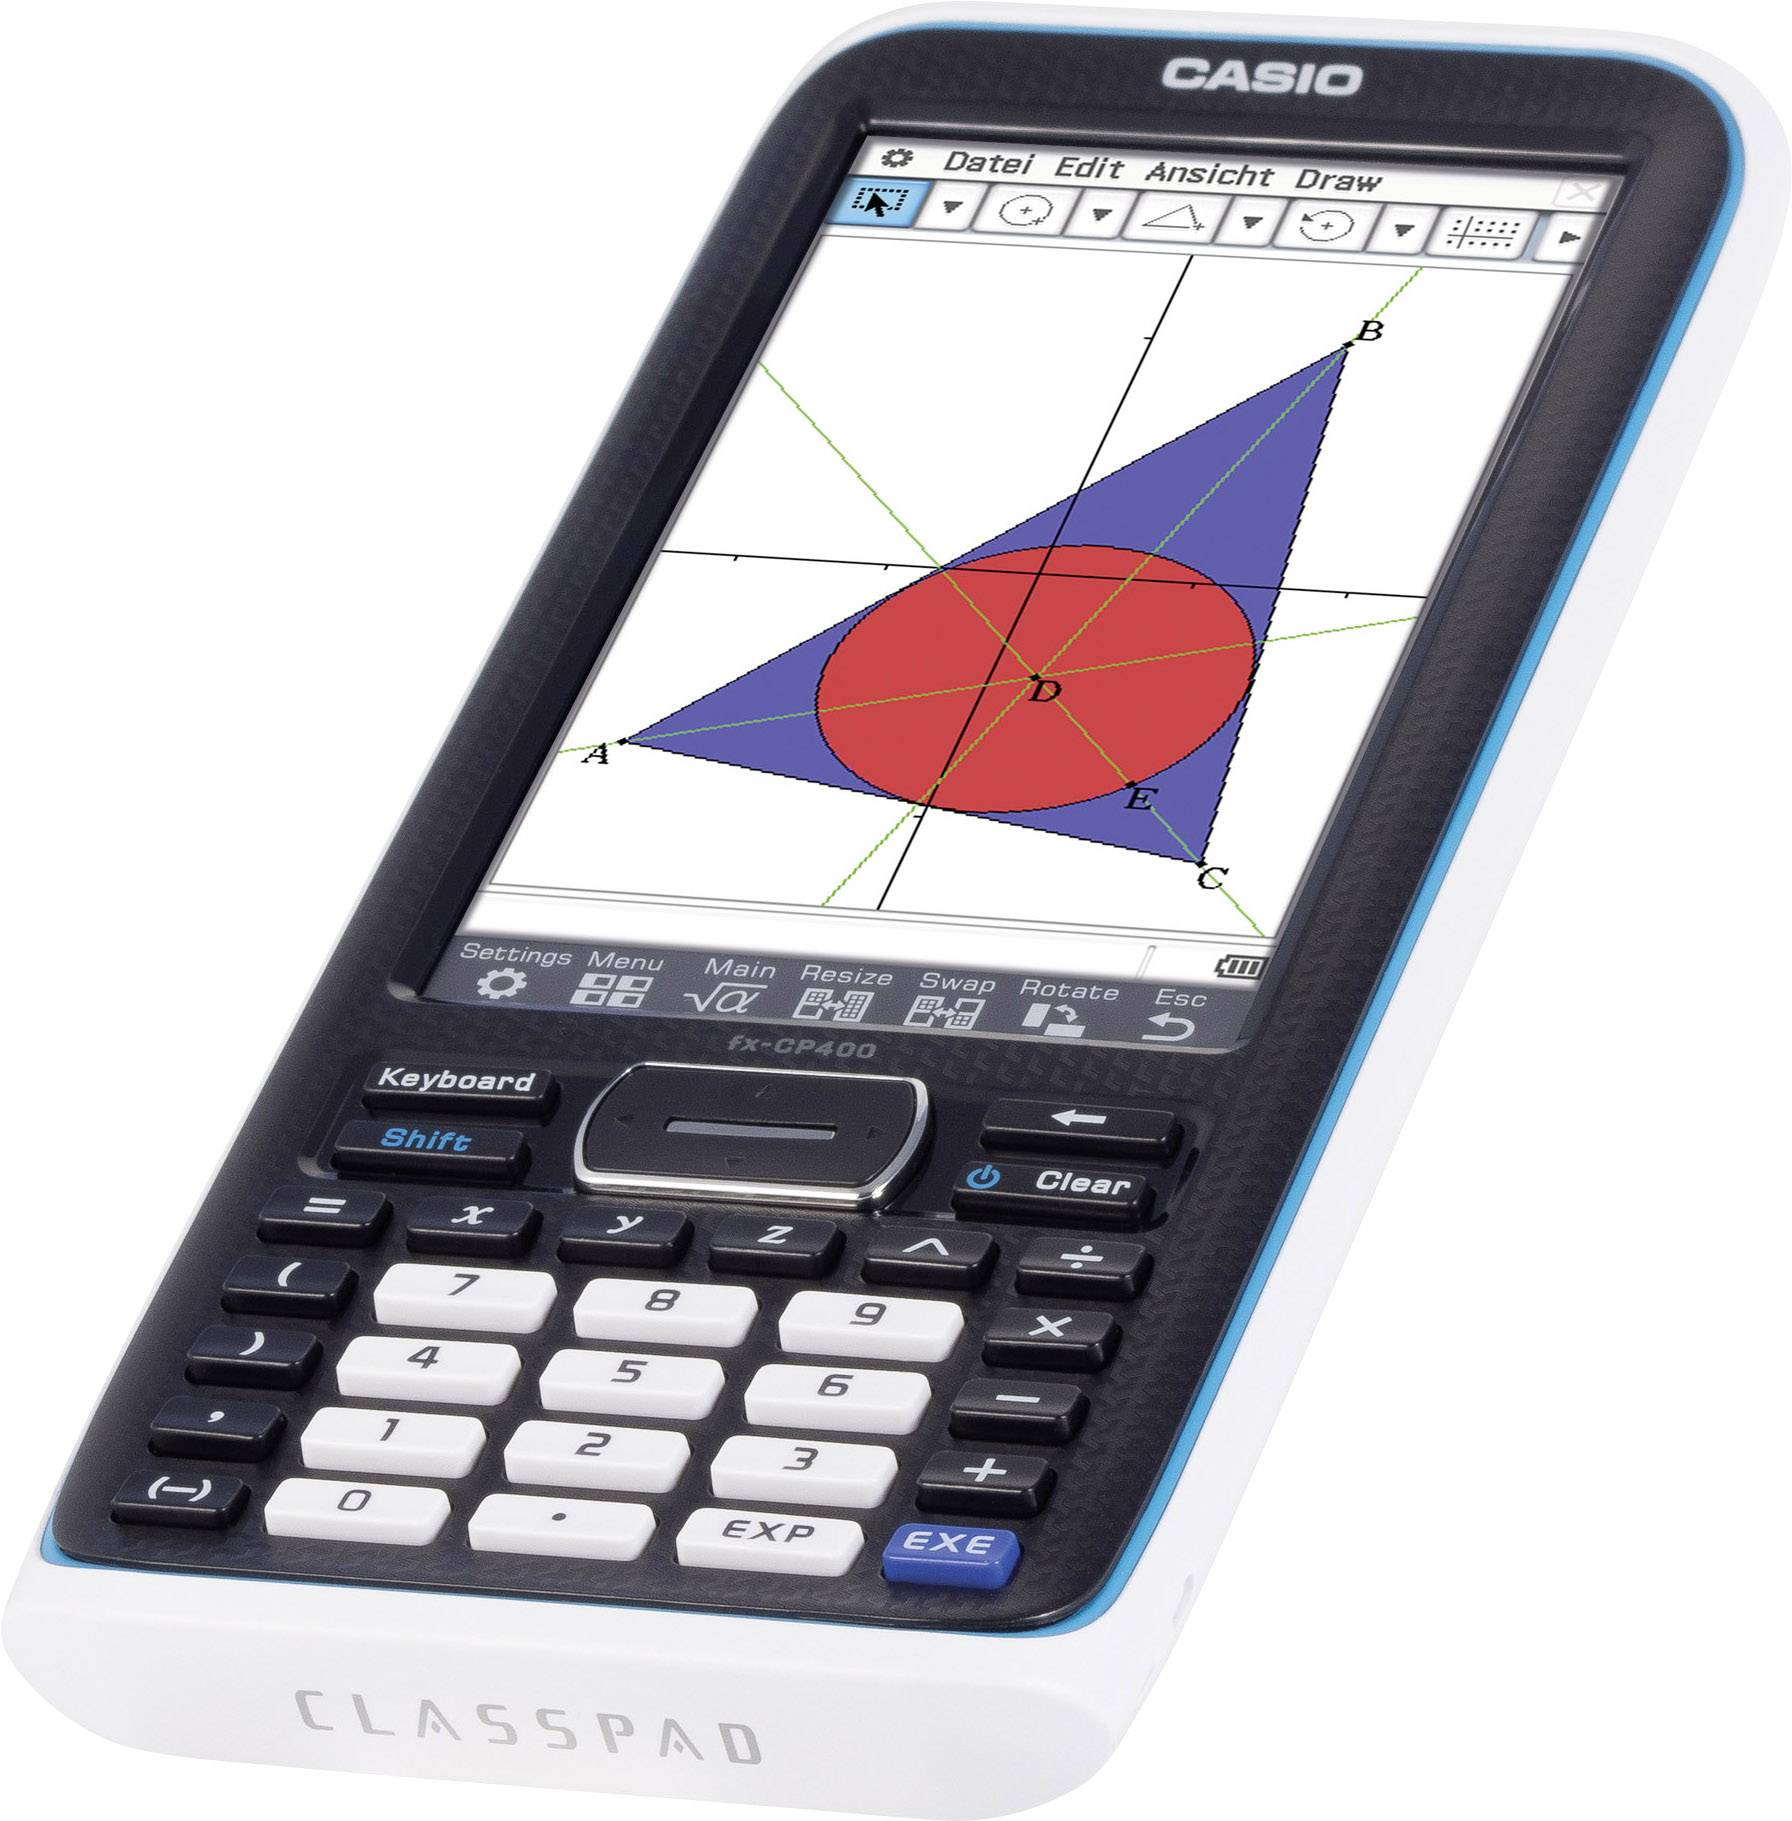 Guerrilla Military Grade Screen Protector for Casio Classpad Graphing Calculator 2-Pack 